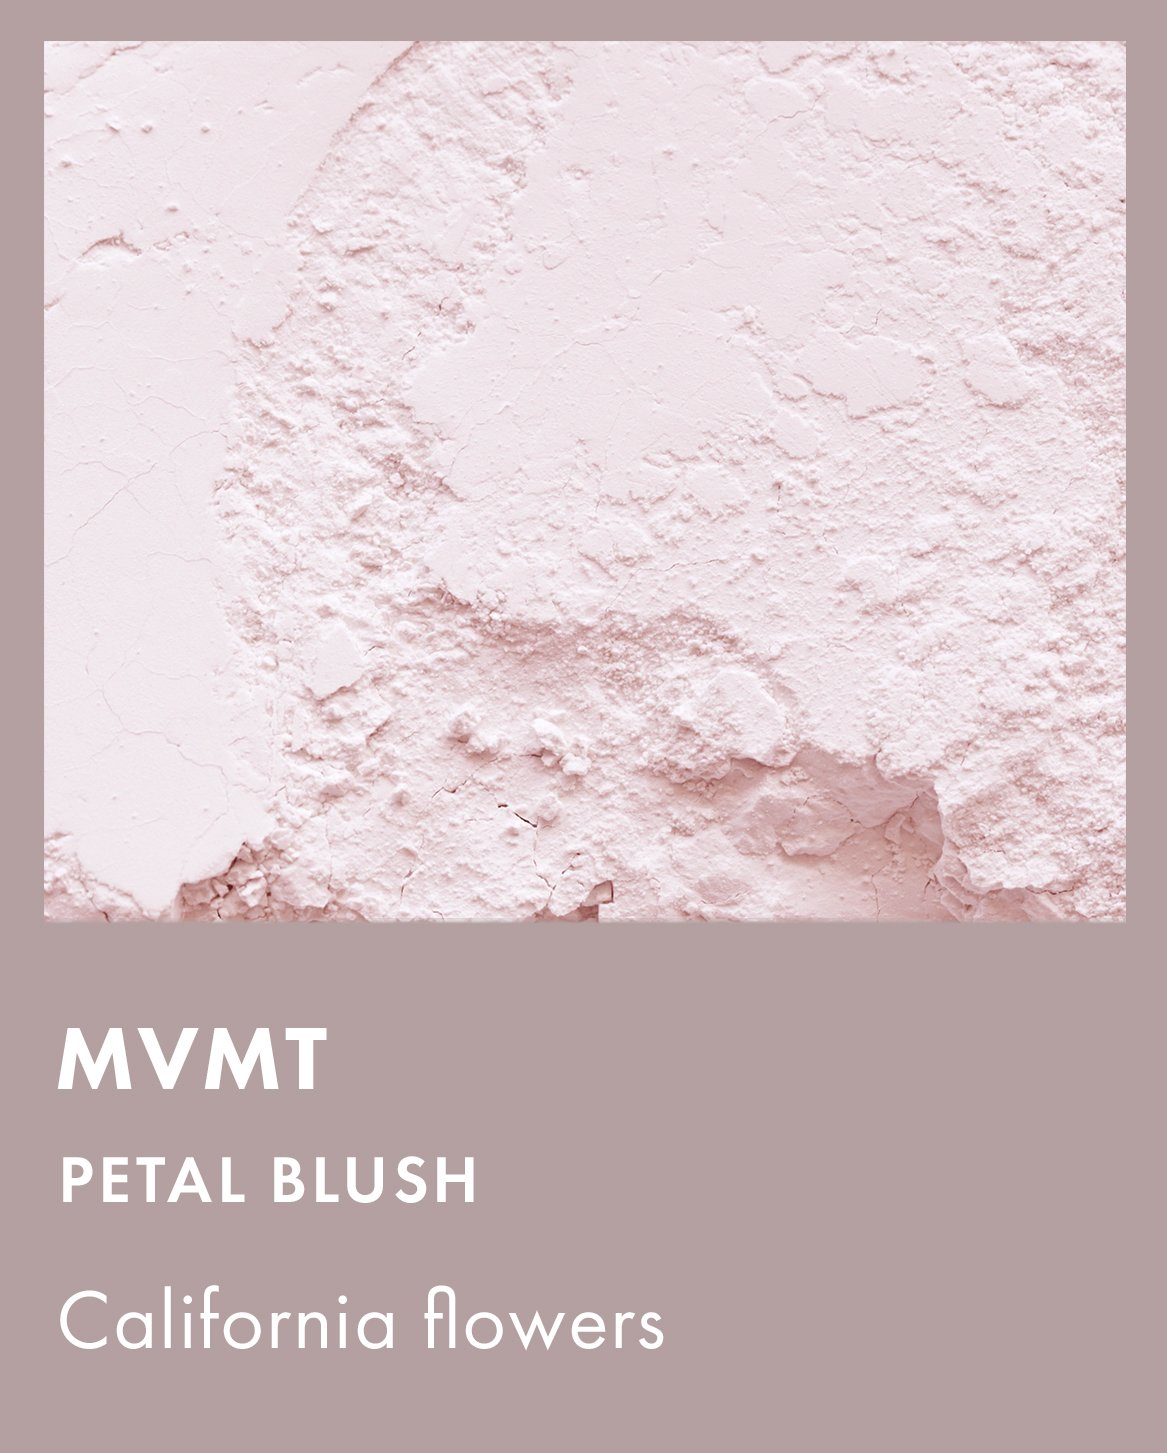 MVMT ceramic swatch in color petal blush